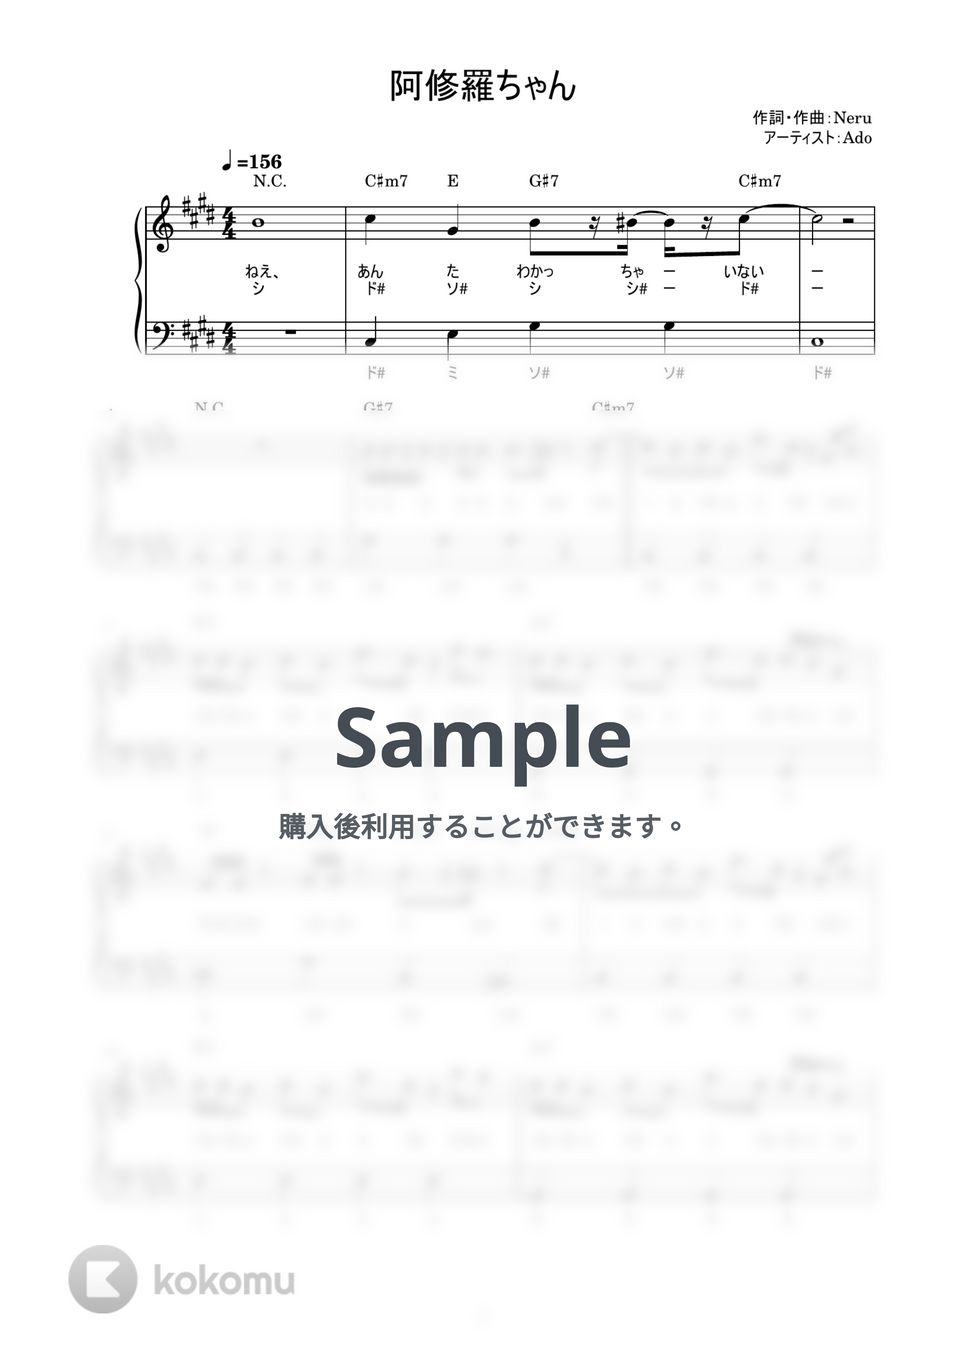 Ado - 阿修羅ちゃん (かんたん / 歌詞付き / ドレミ付き / 初心者) by piano.tokyo